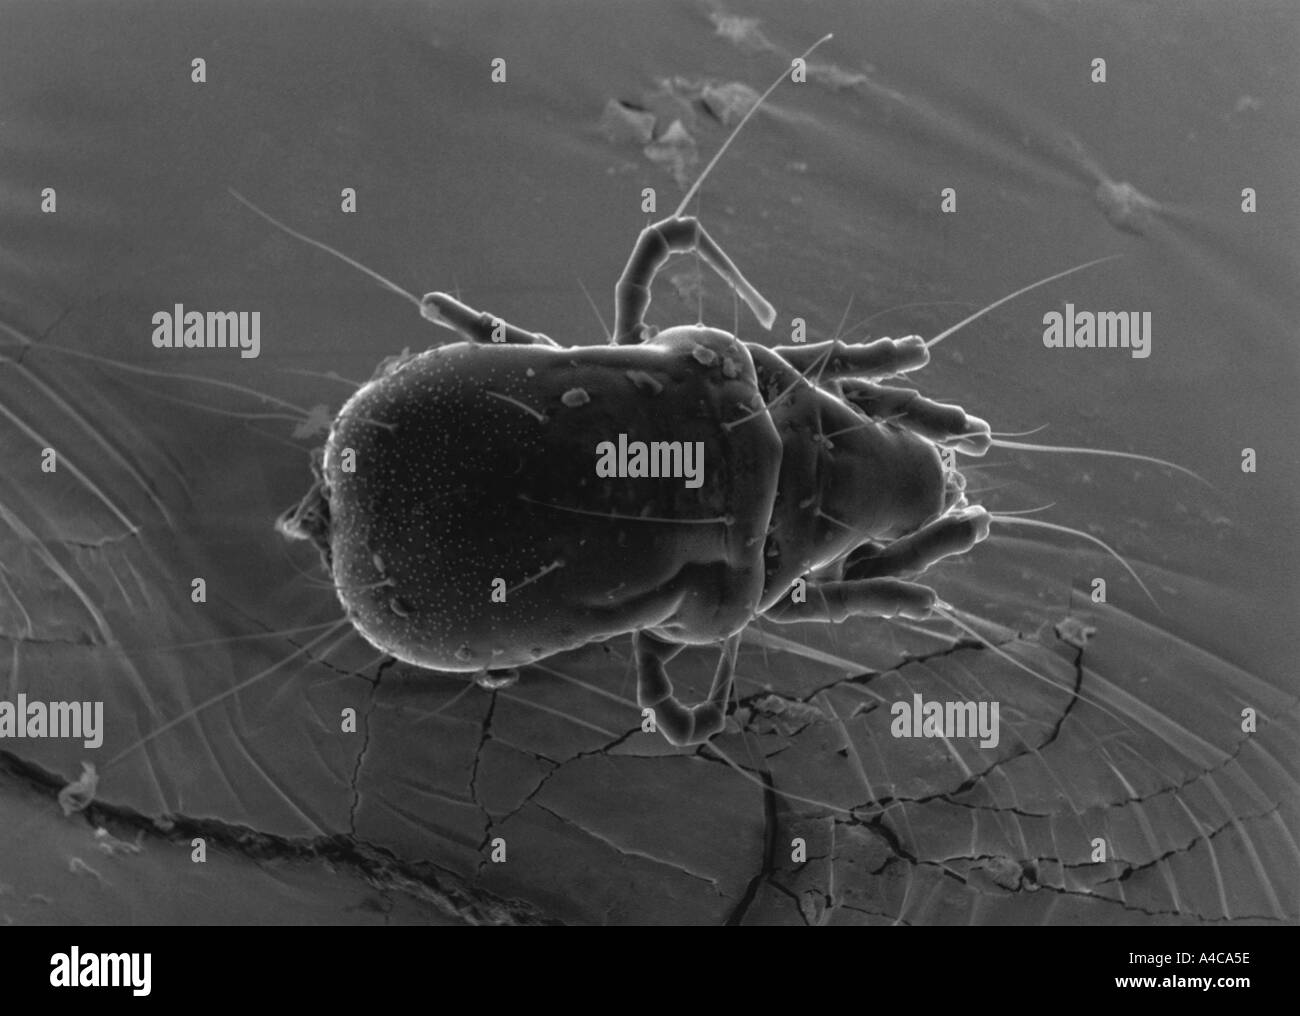 Scanning electron microscope image of mite Stock Photo